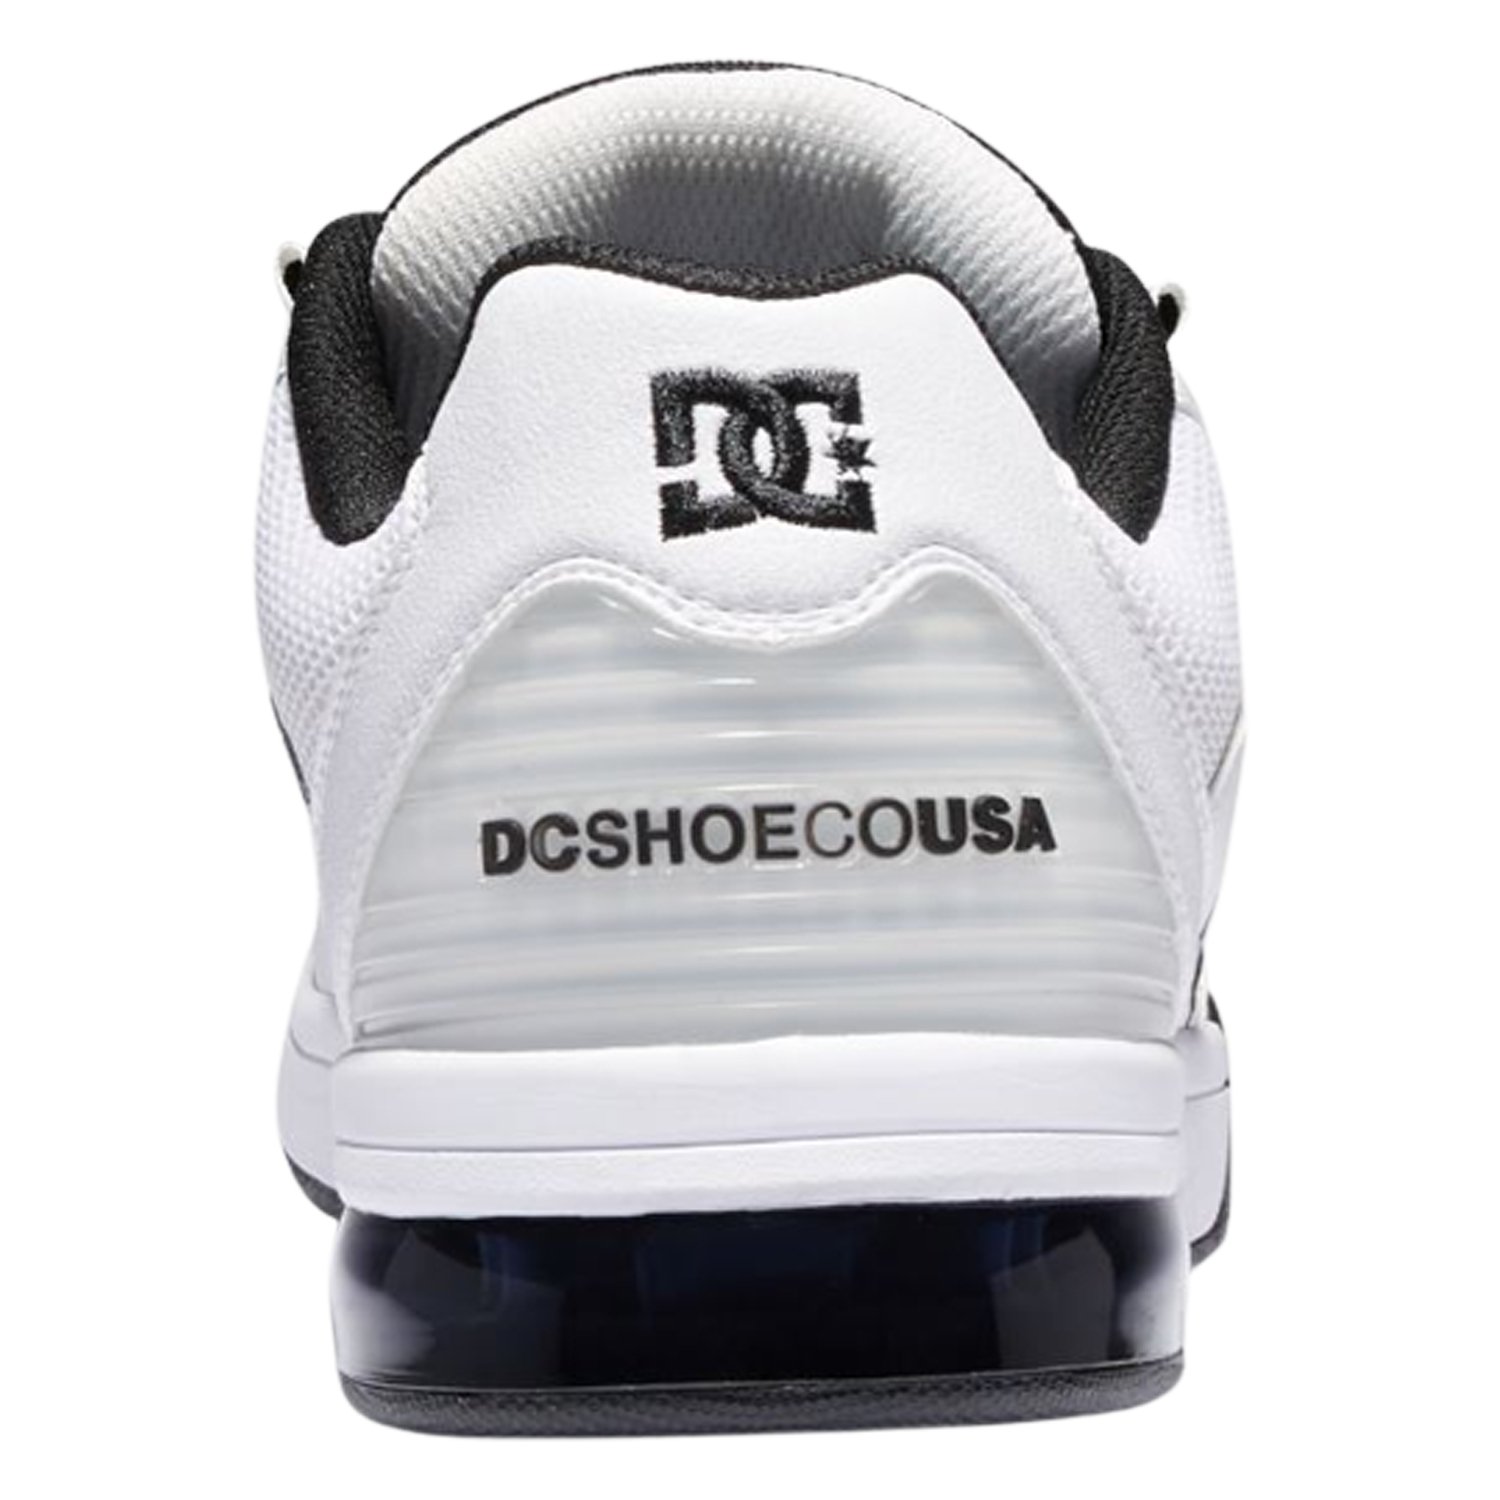 Tênis Dc Shoes Versatile Masculino -  Branco e Preto Branco 4